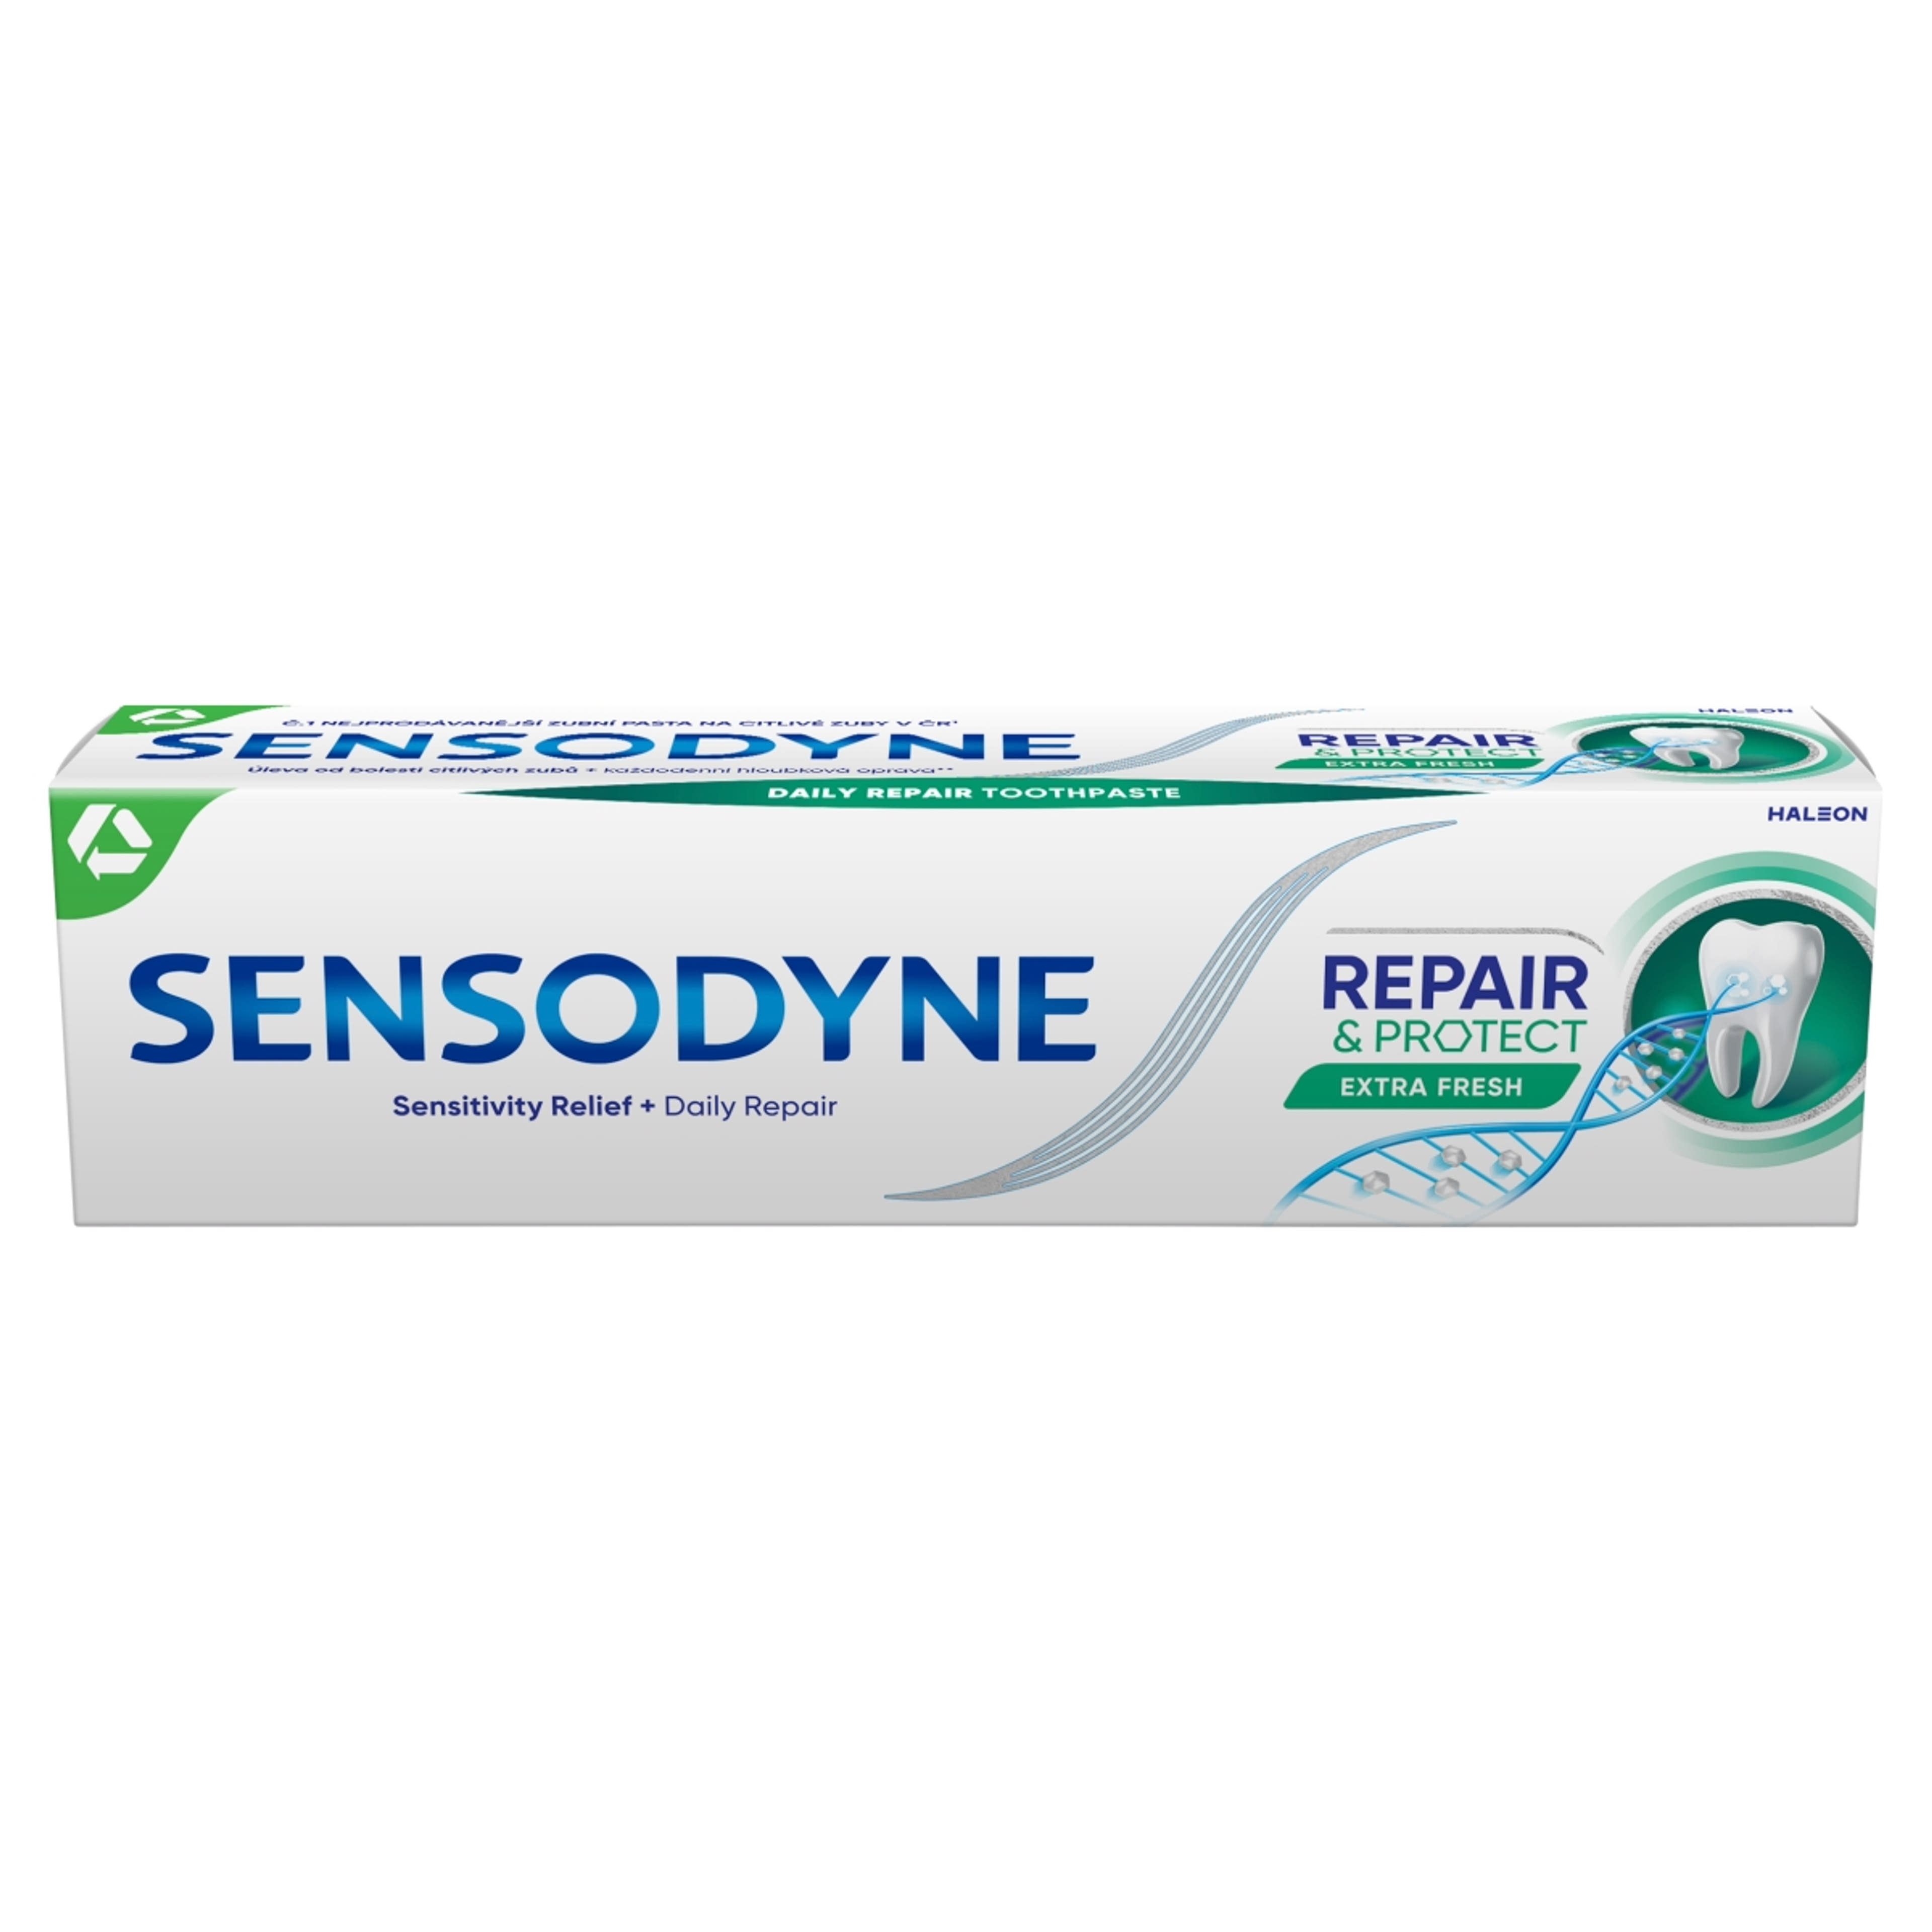 Sensodyne Repair & Protect Extra Fresh fogkrém - 75 ml